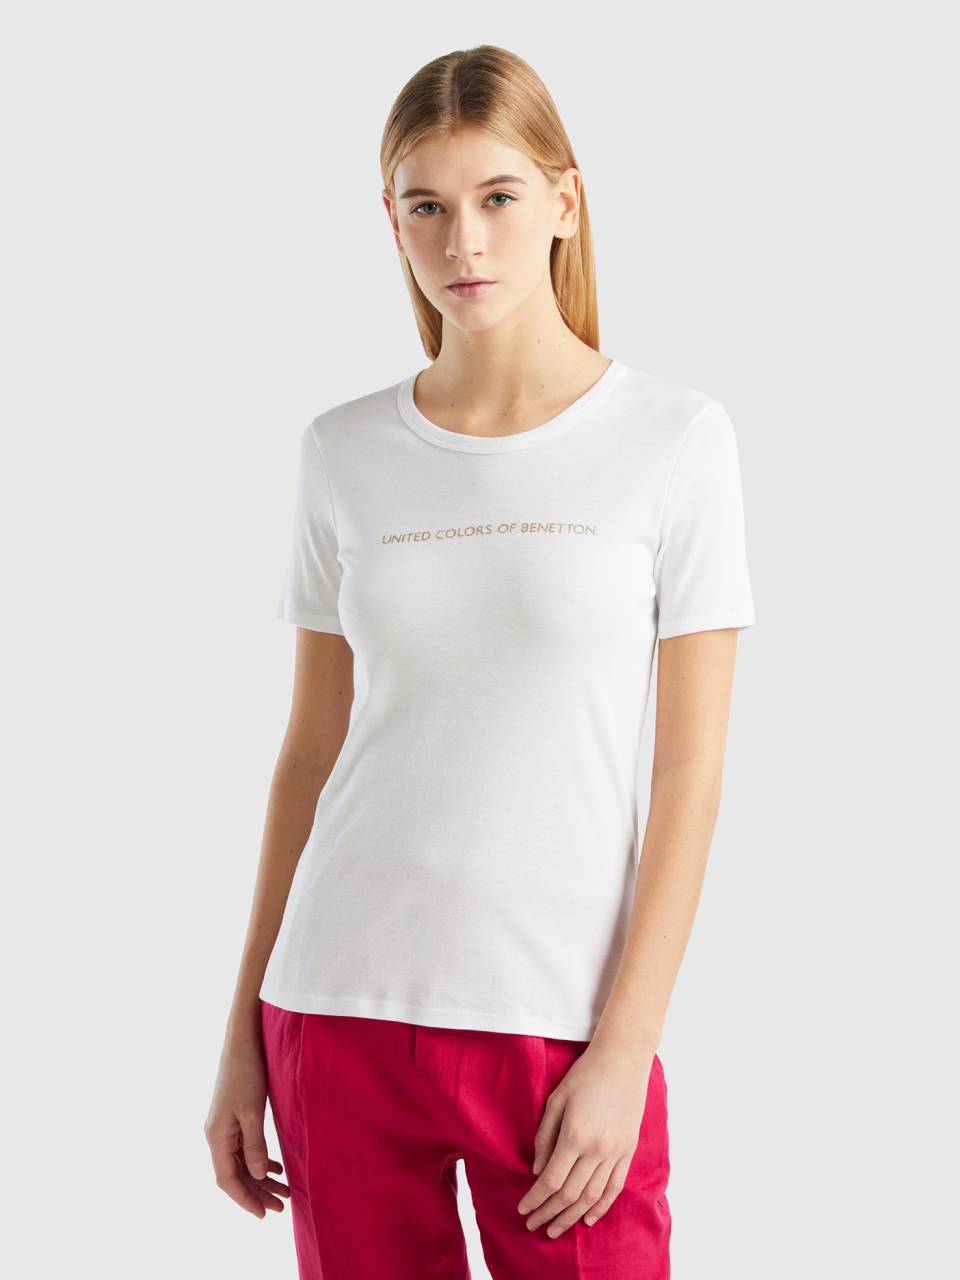 100% cotton with | T-shirt White - in glitter print Benetton logo